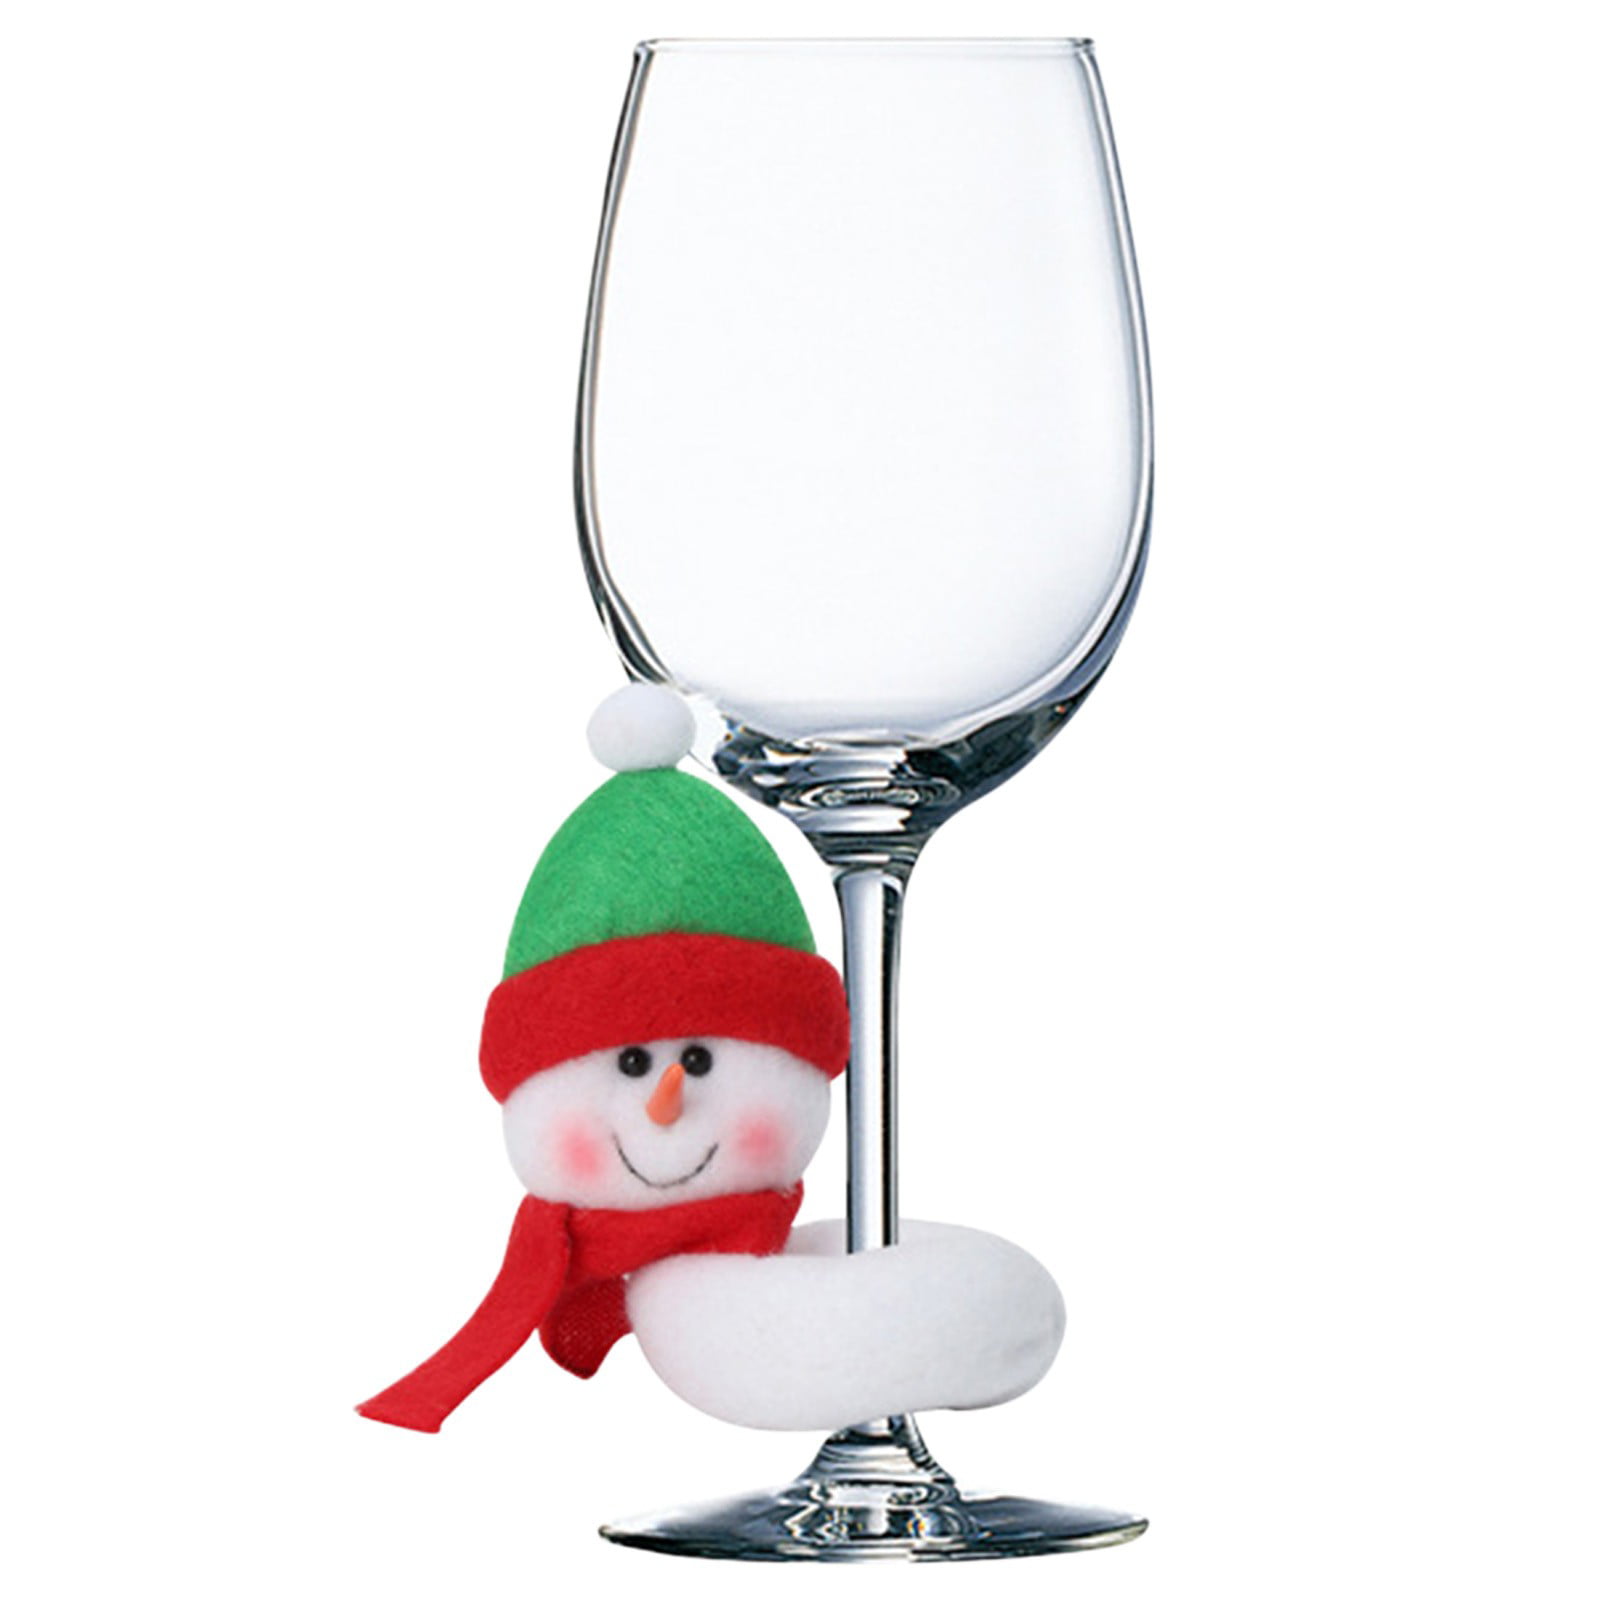 SANTA CLAUS Xmas Cutlery Tableware Wine Glass Set Decor Holders Hats Novelty Fun 